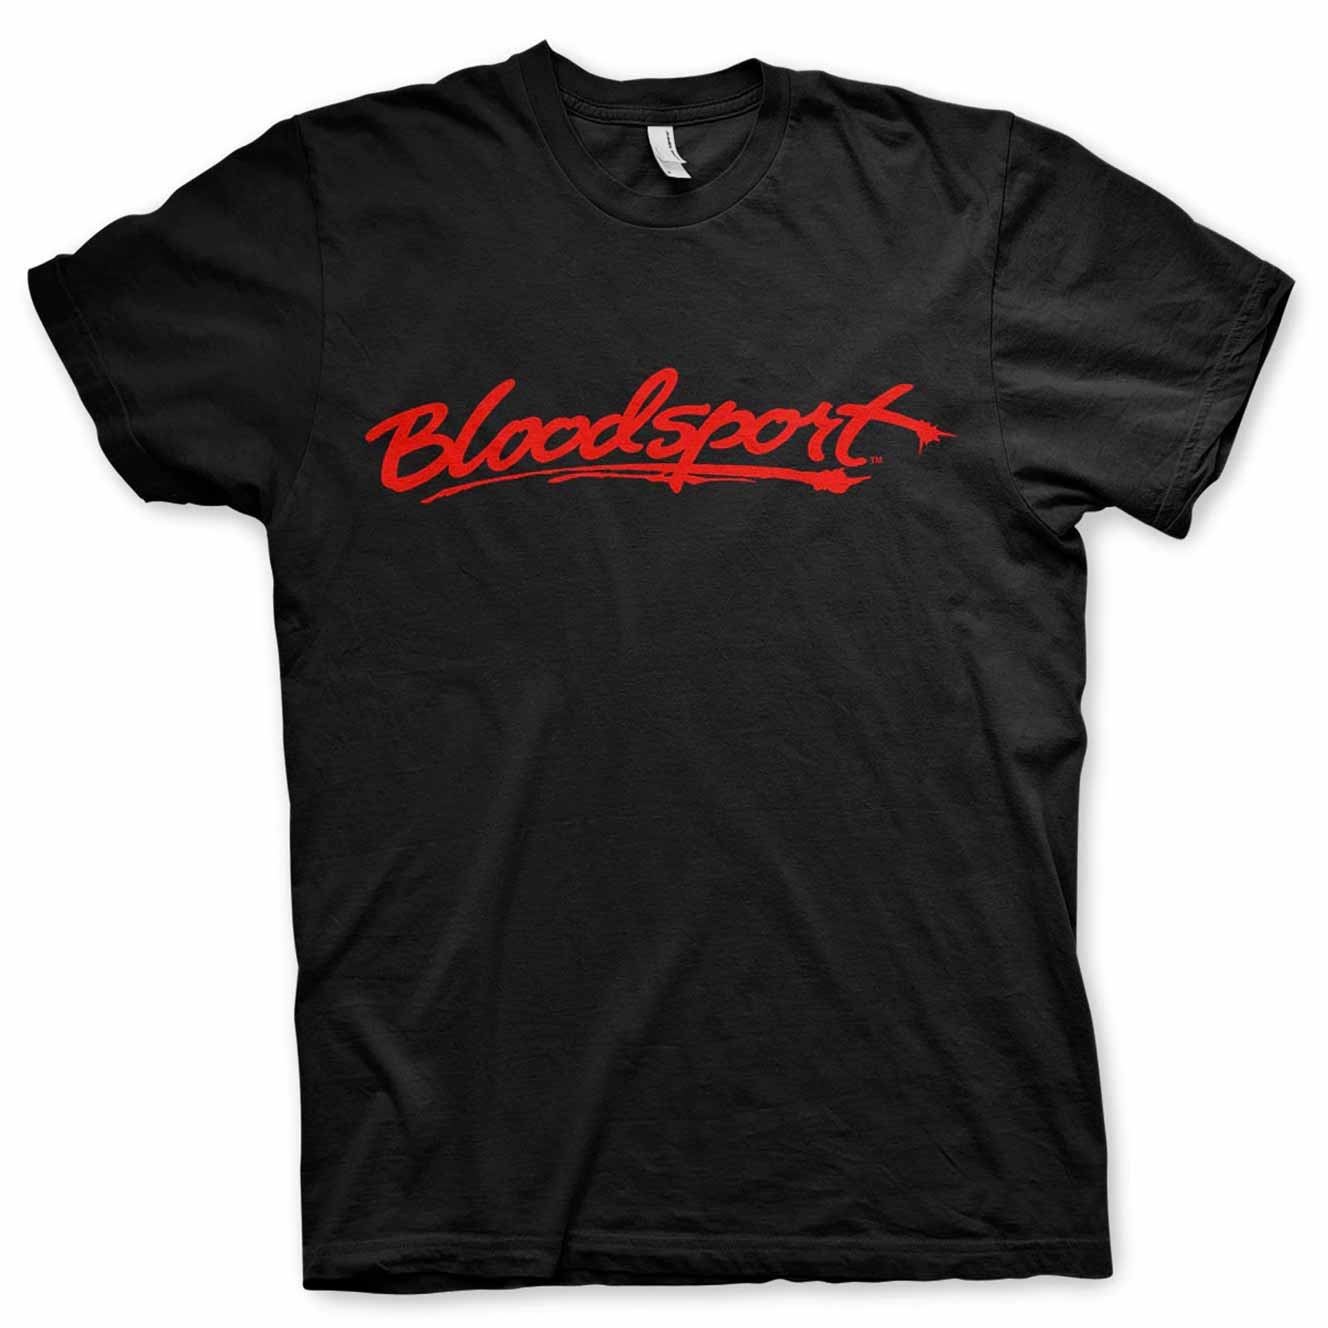 Sort T-shirt med Bloodsport logoet trykt på brystet